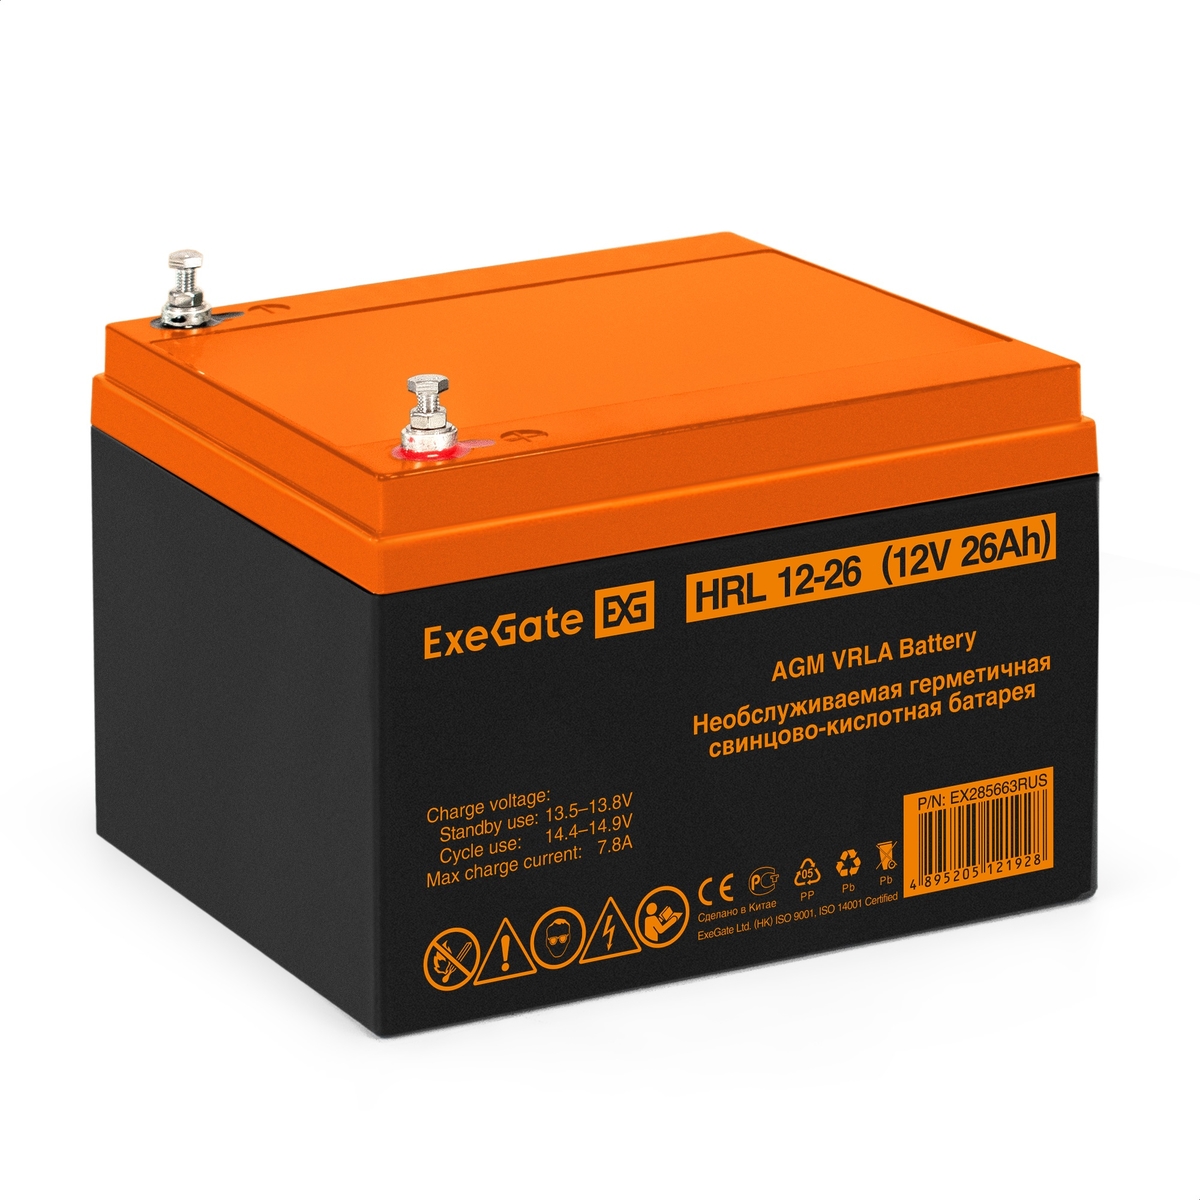 UPS set EX295996 + battery 26Ah EX285663 1 piece